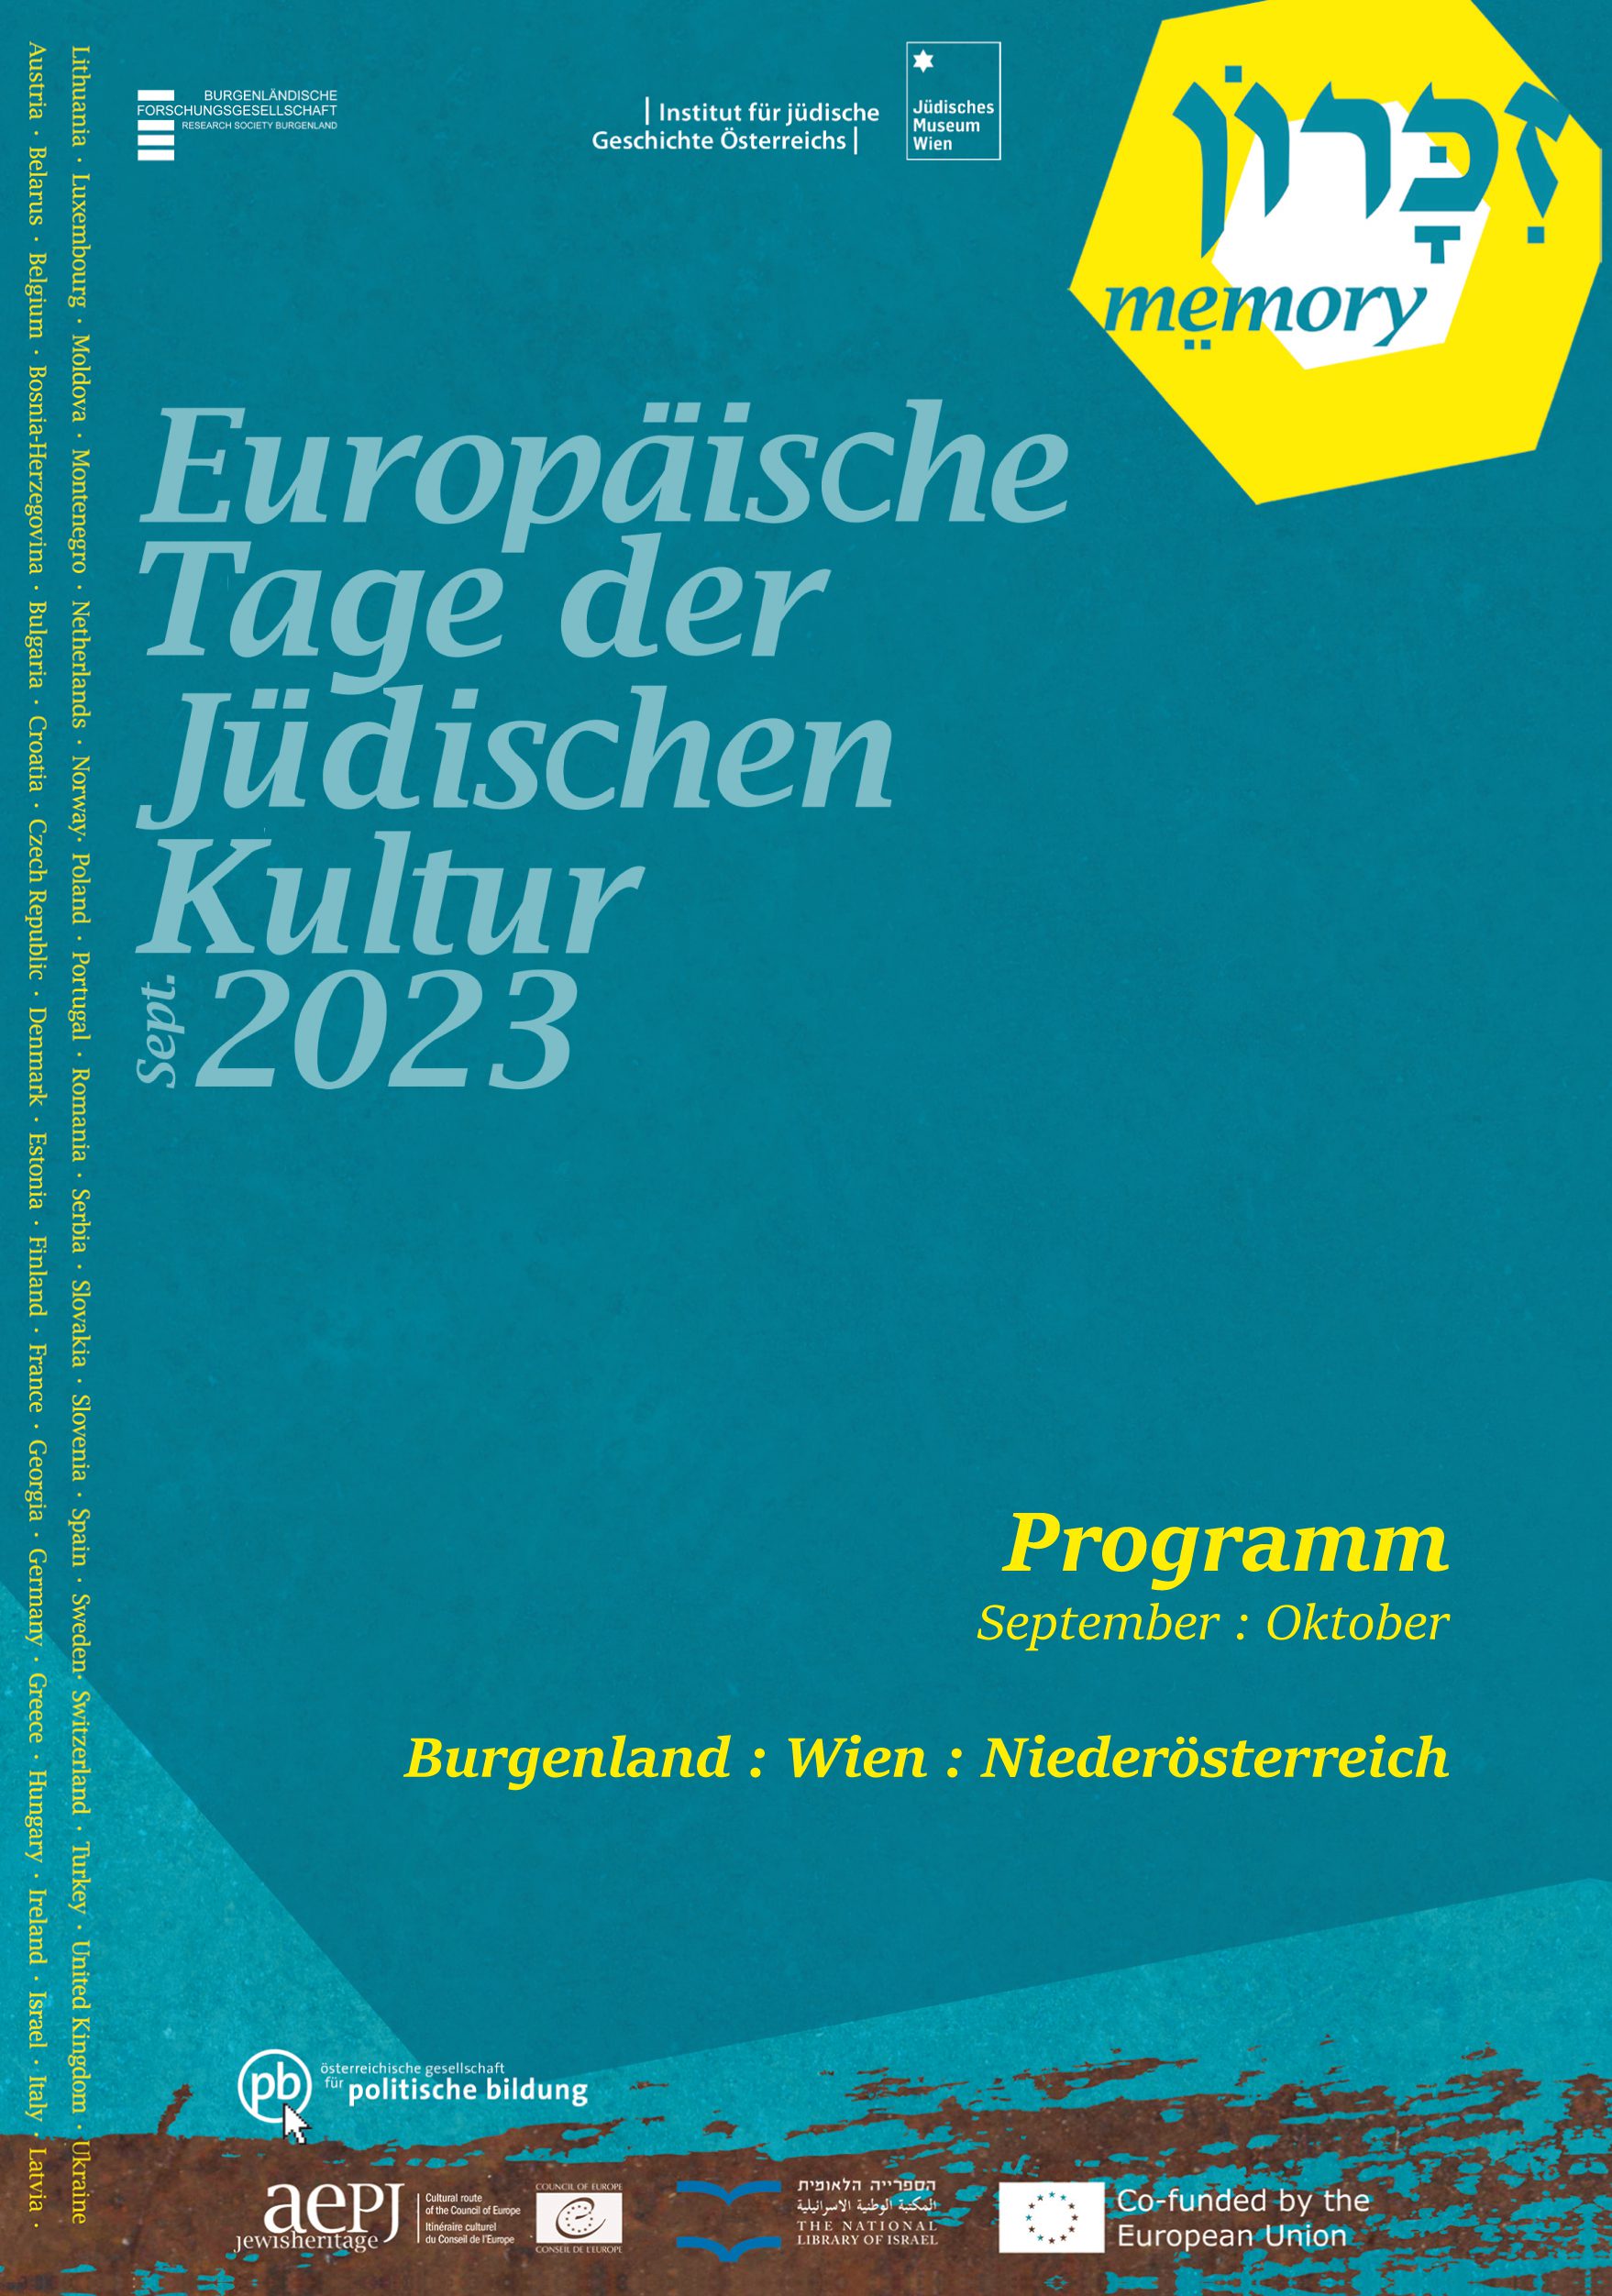 EDJC 2023 in Austria